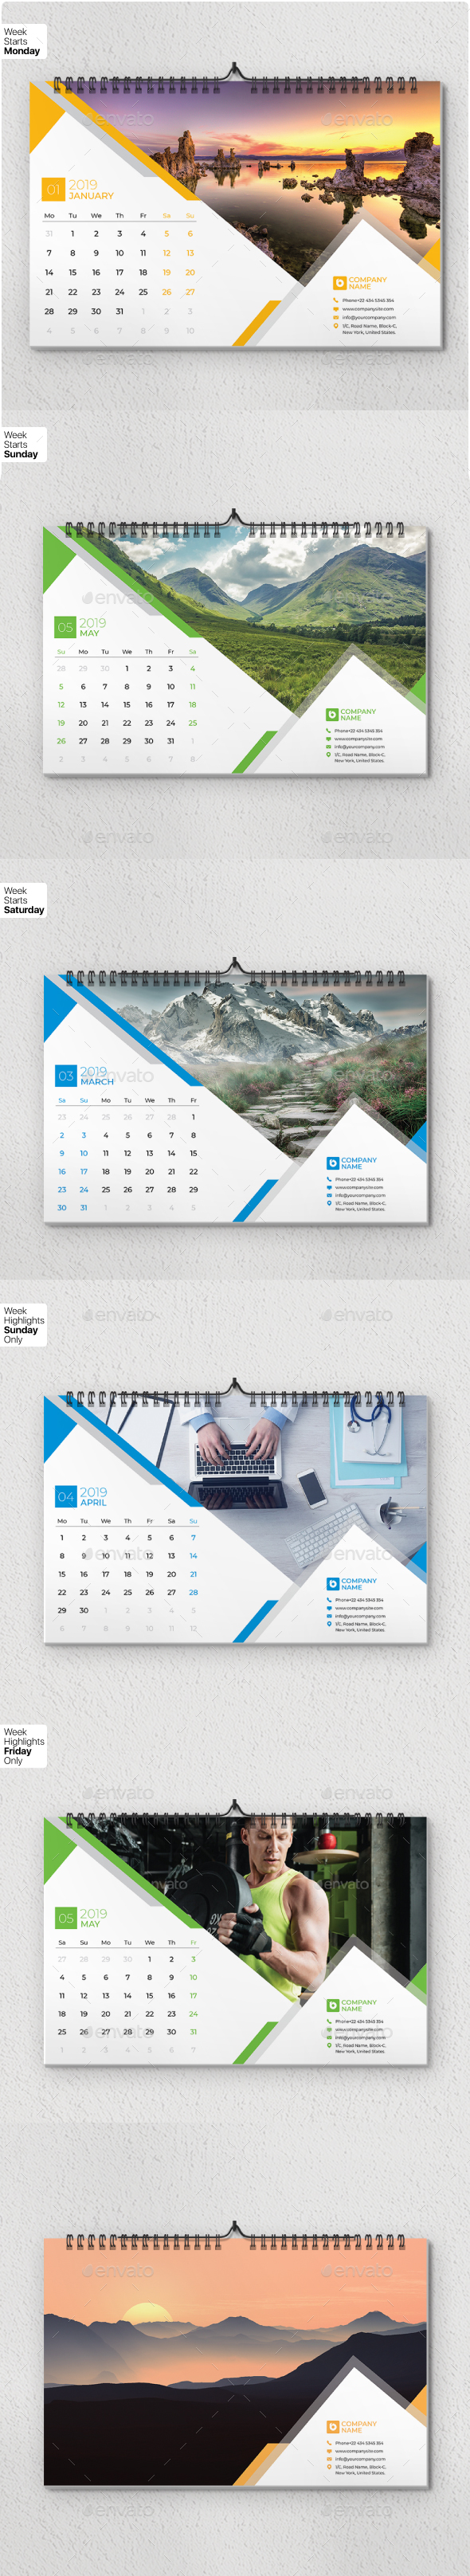 Wall Calendar 2019 - Calendars Stationery